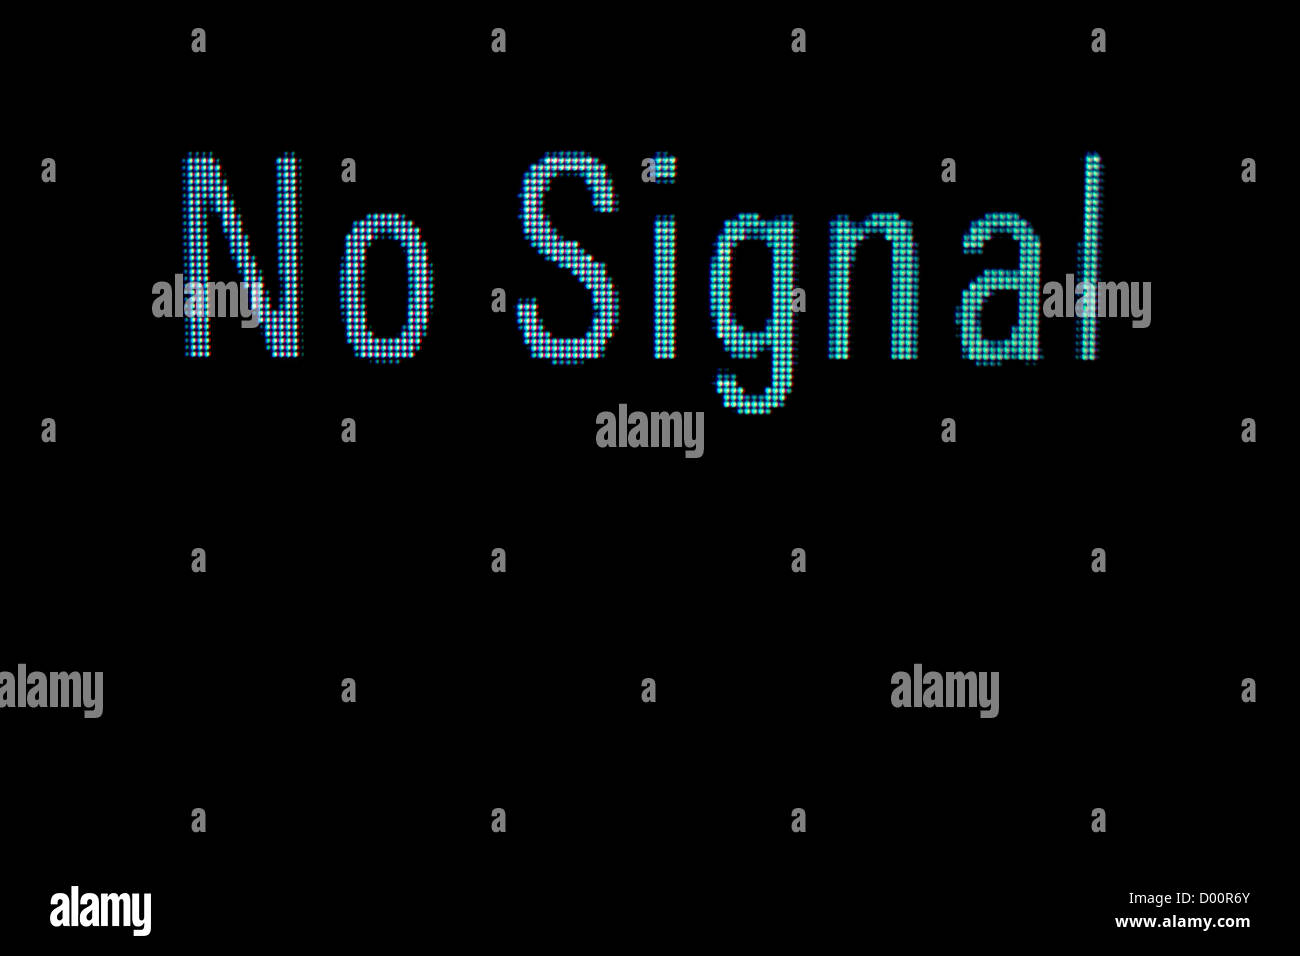 No signal Stock Photo